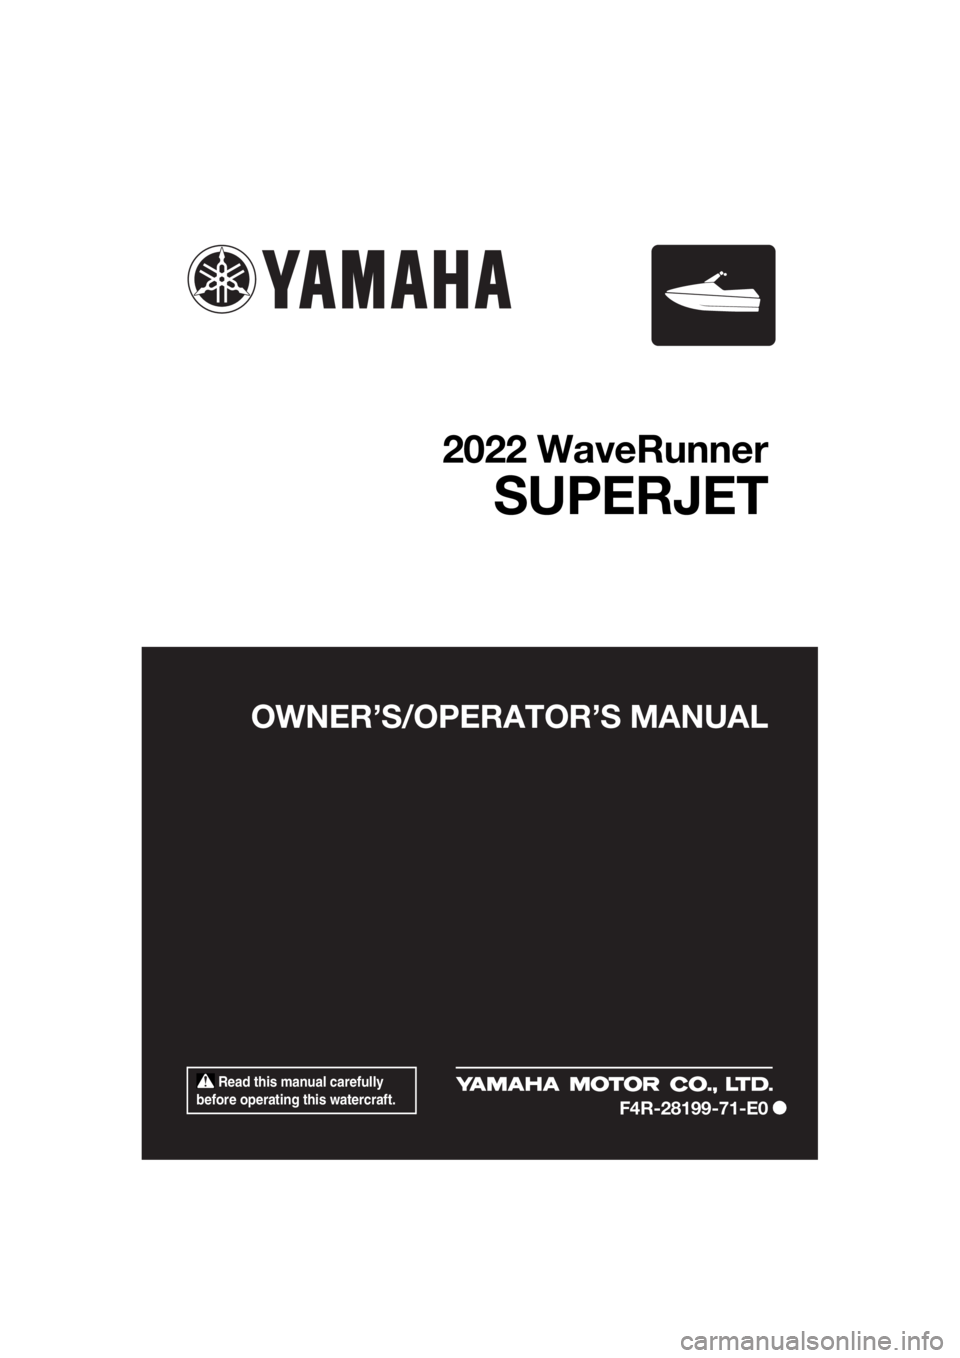 YAMAHA SUPERJET 2022  Owners Manual 